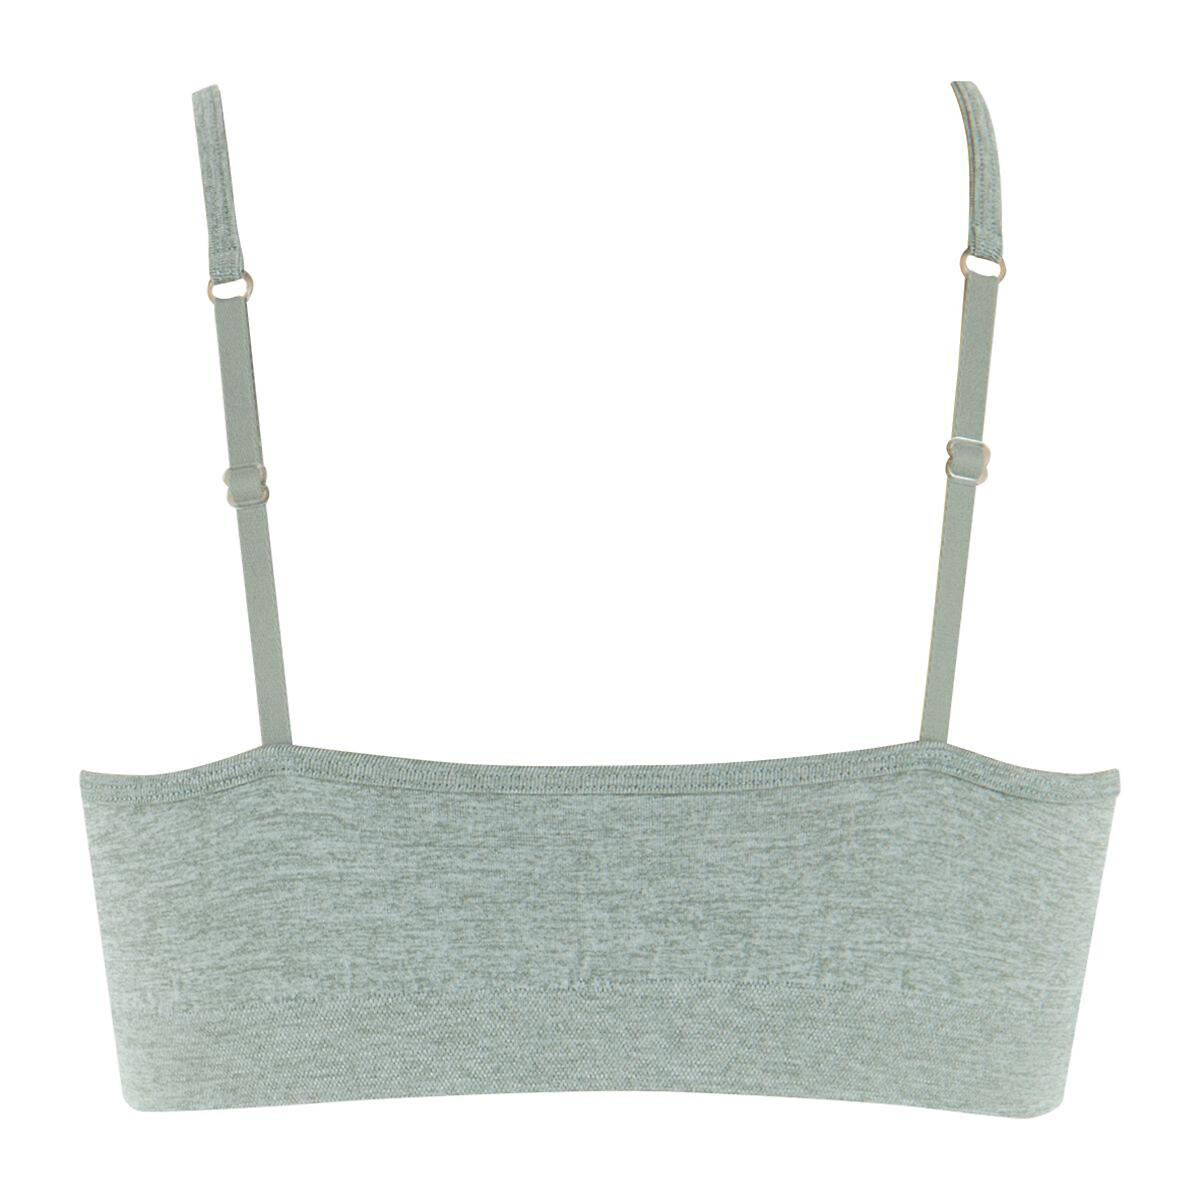 Cotton non-underwired bra, sizes 26a-32b, grey marl, Dim